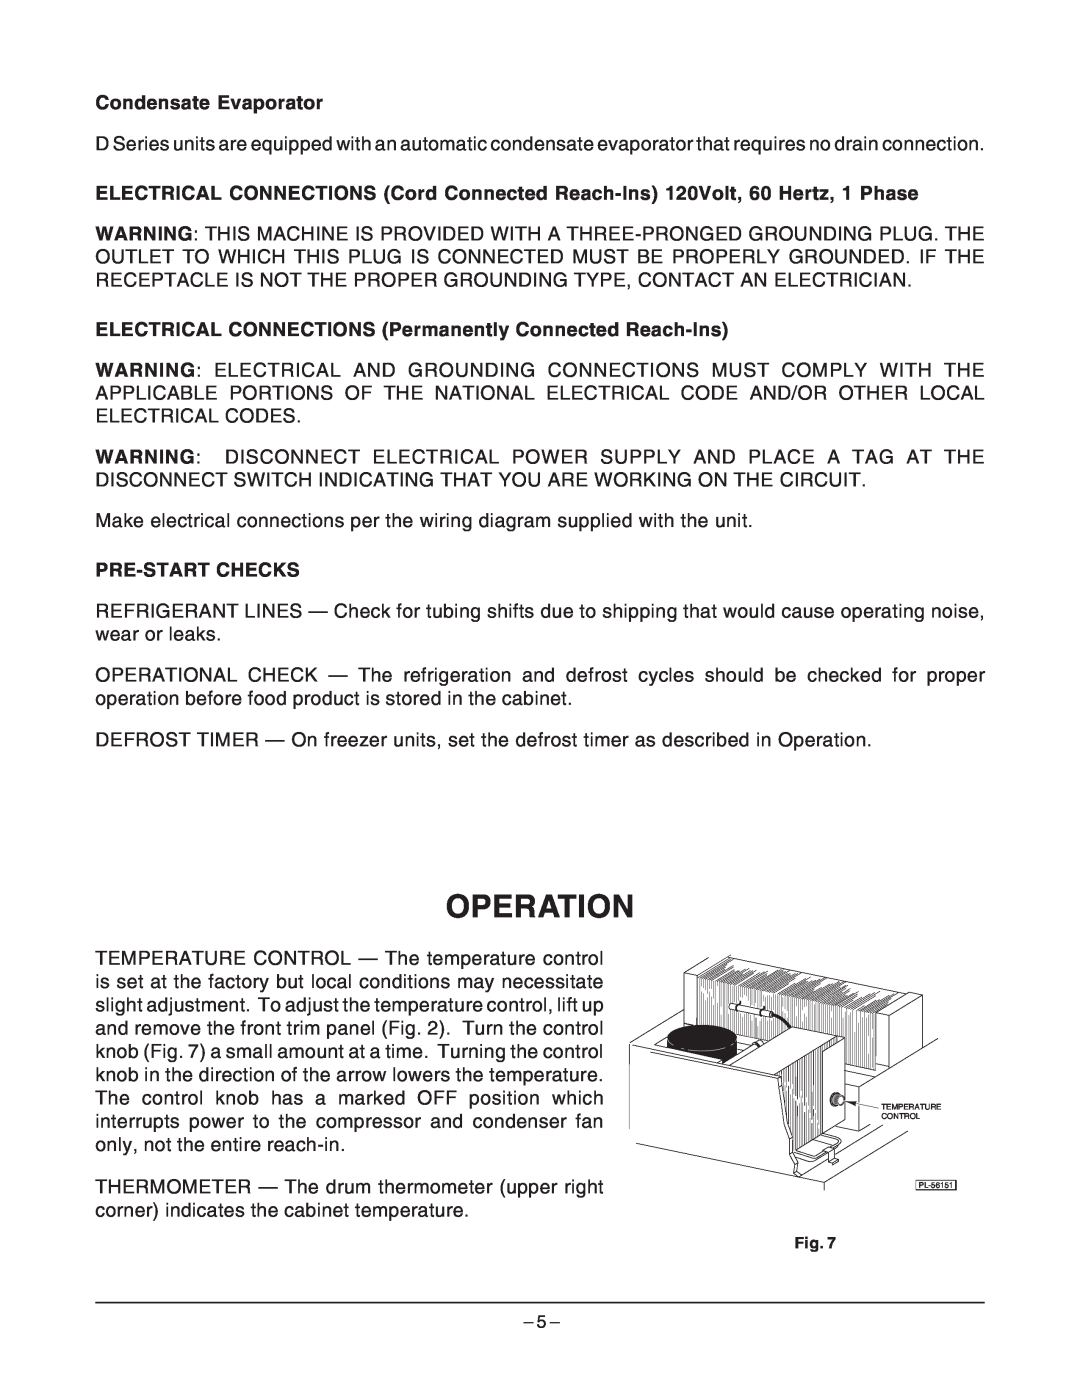 Hobart D Series manual Operation, Condensate Evaporator, Pre-Startchecks 